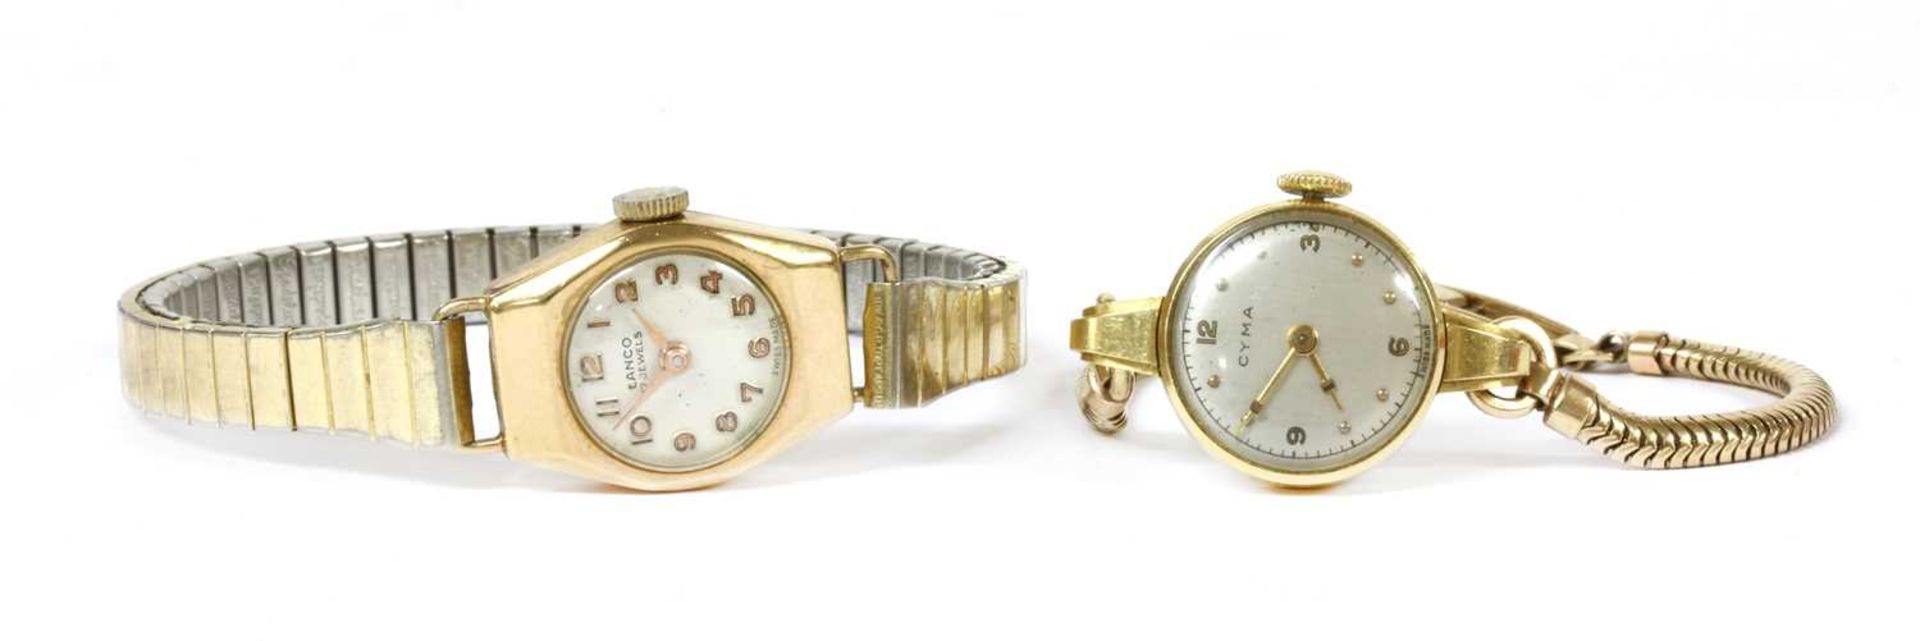 A ladies' gold Cyma mechanical bracelet watch,